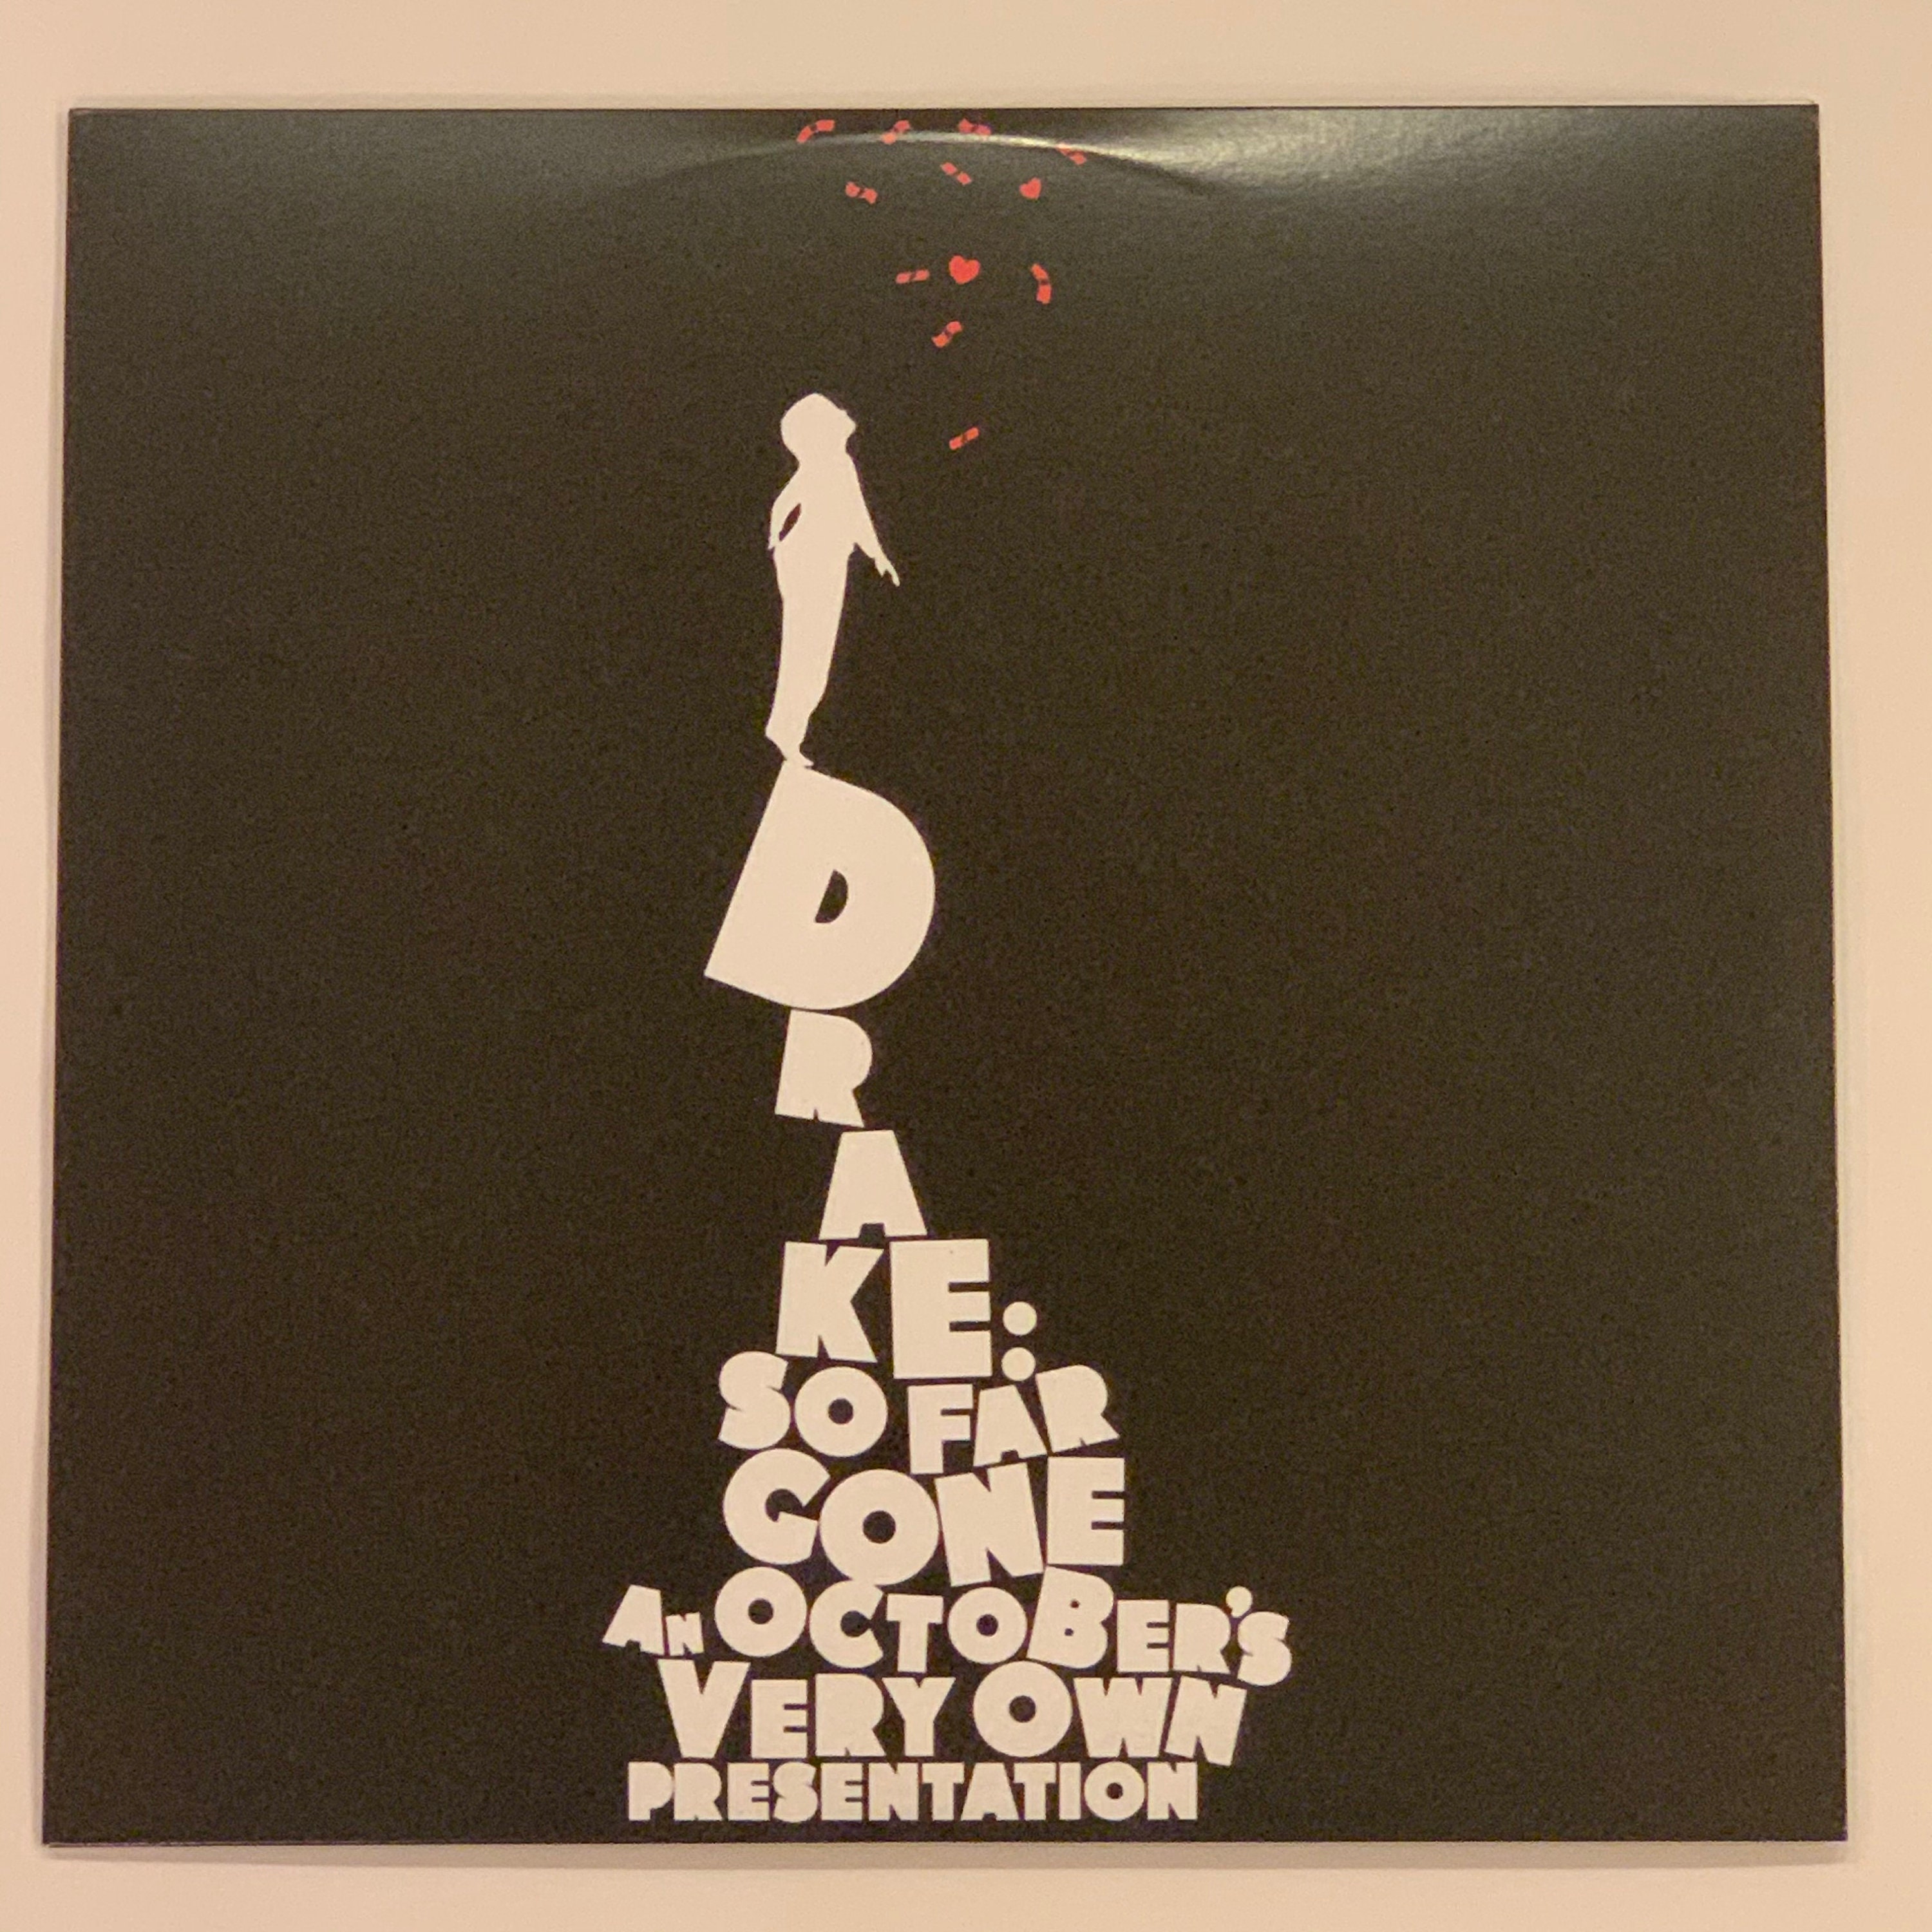 Drake - Thank Me Later - 2x LP Vinyl